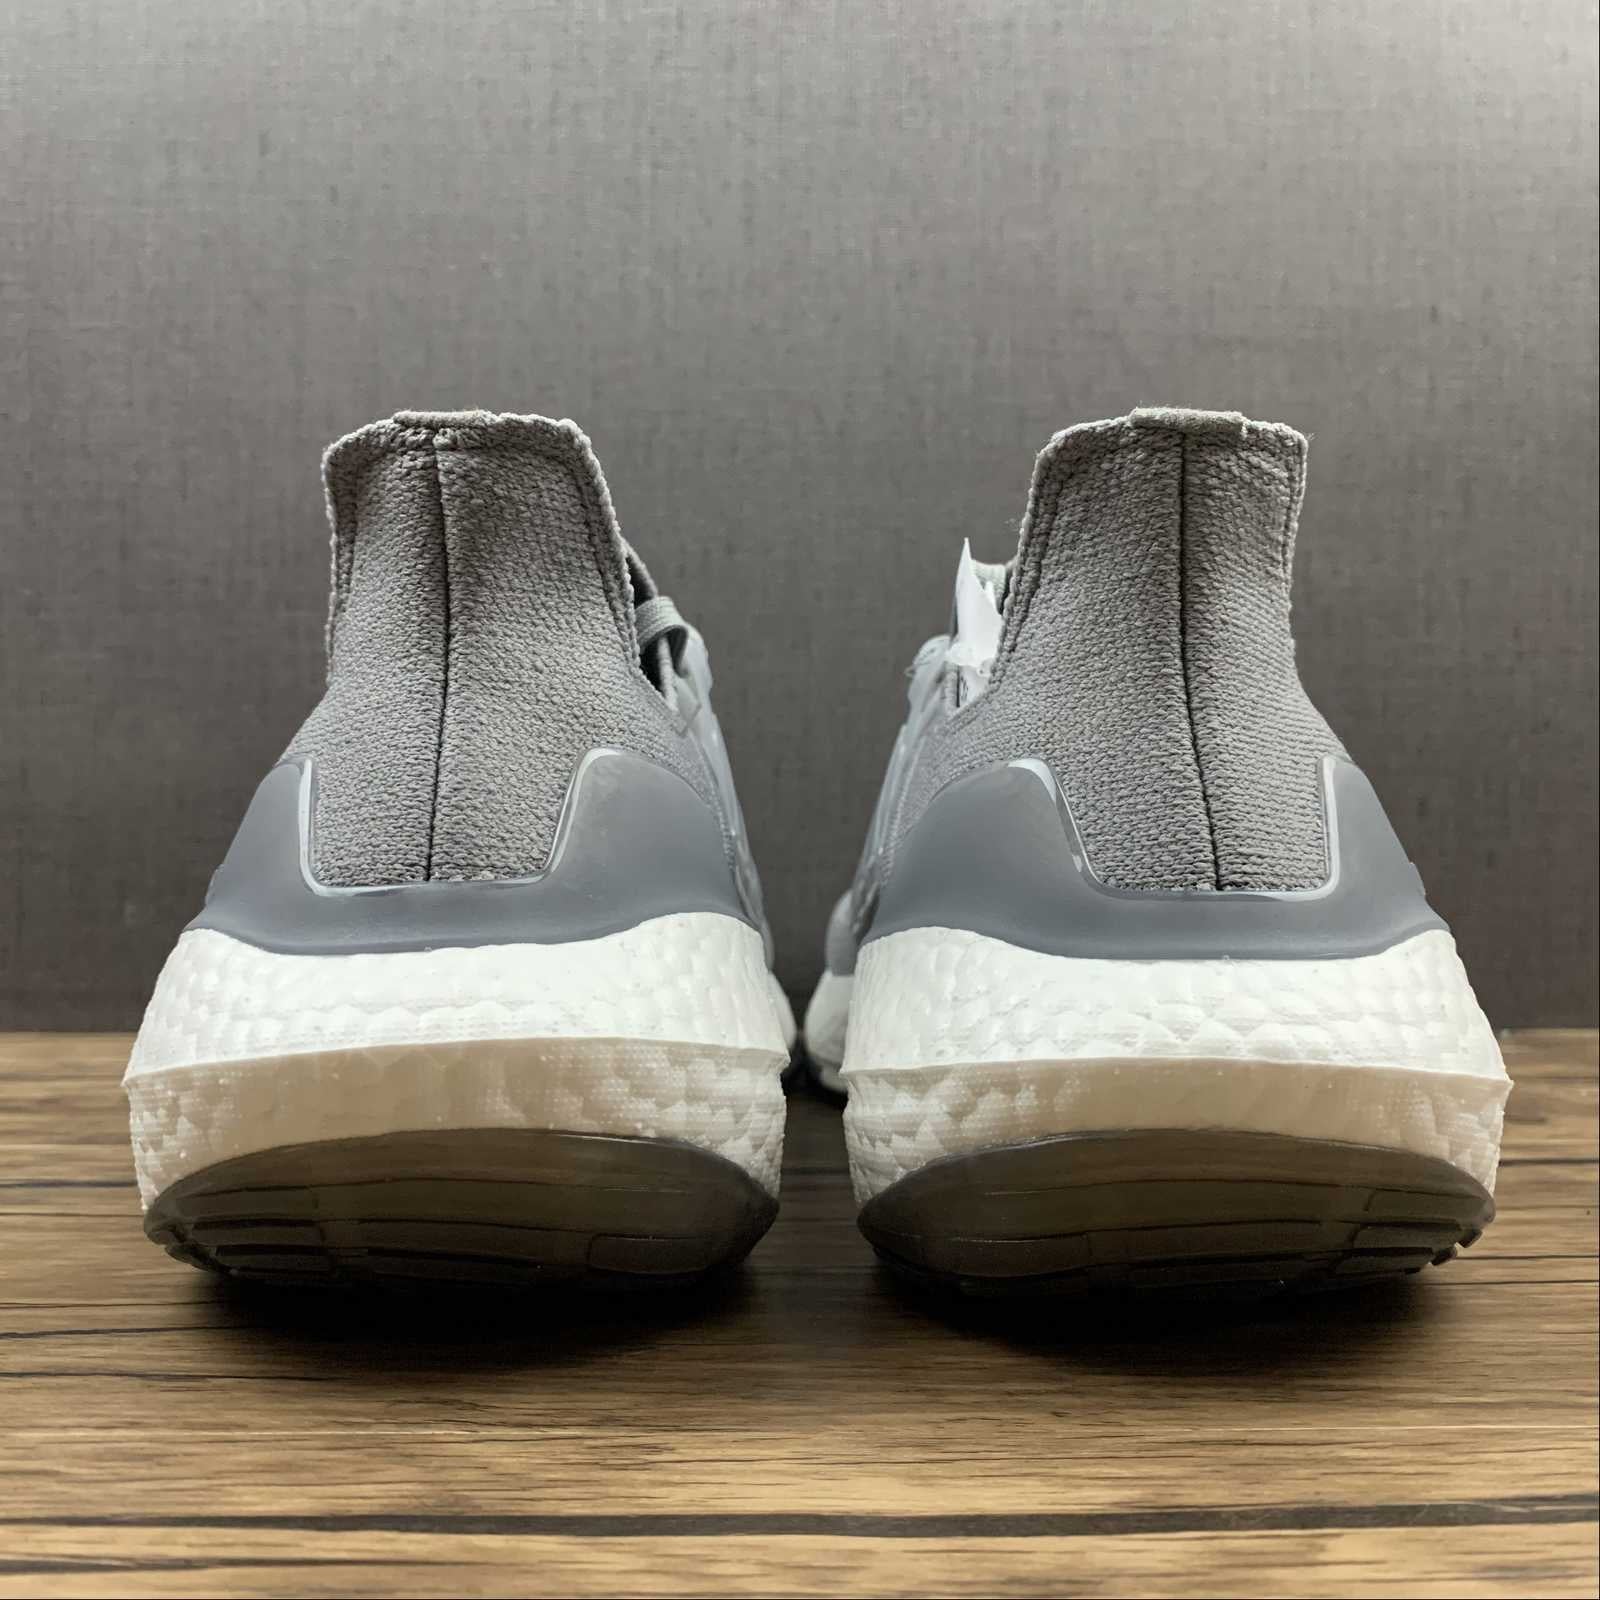 Adidas ultraboost grey shoes